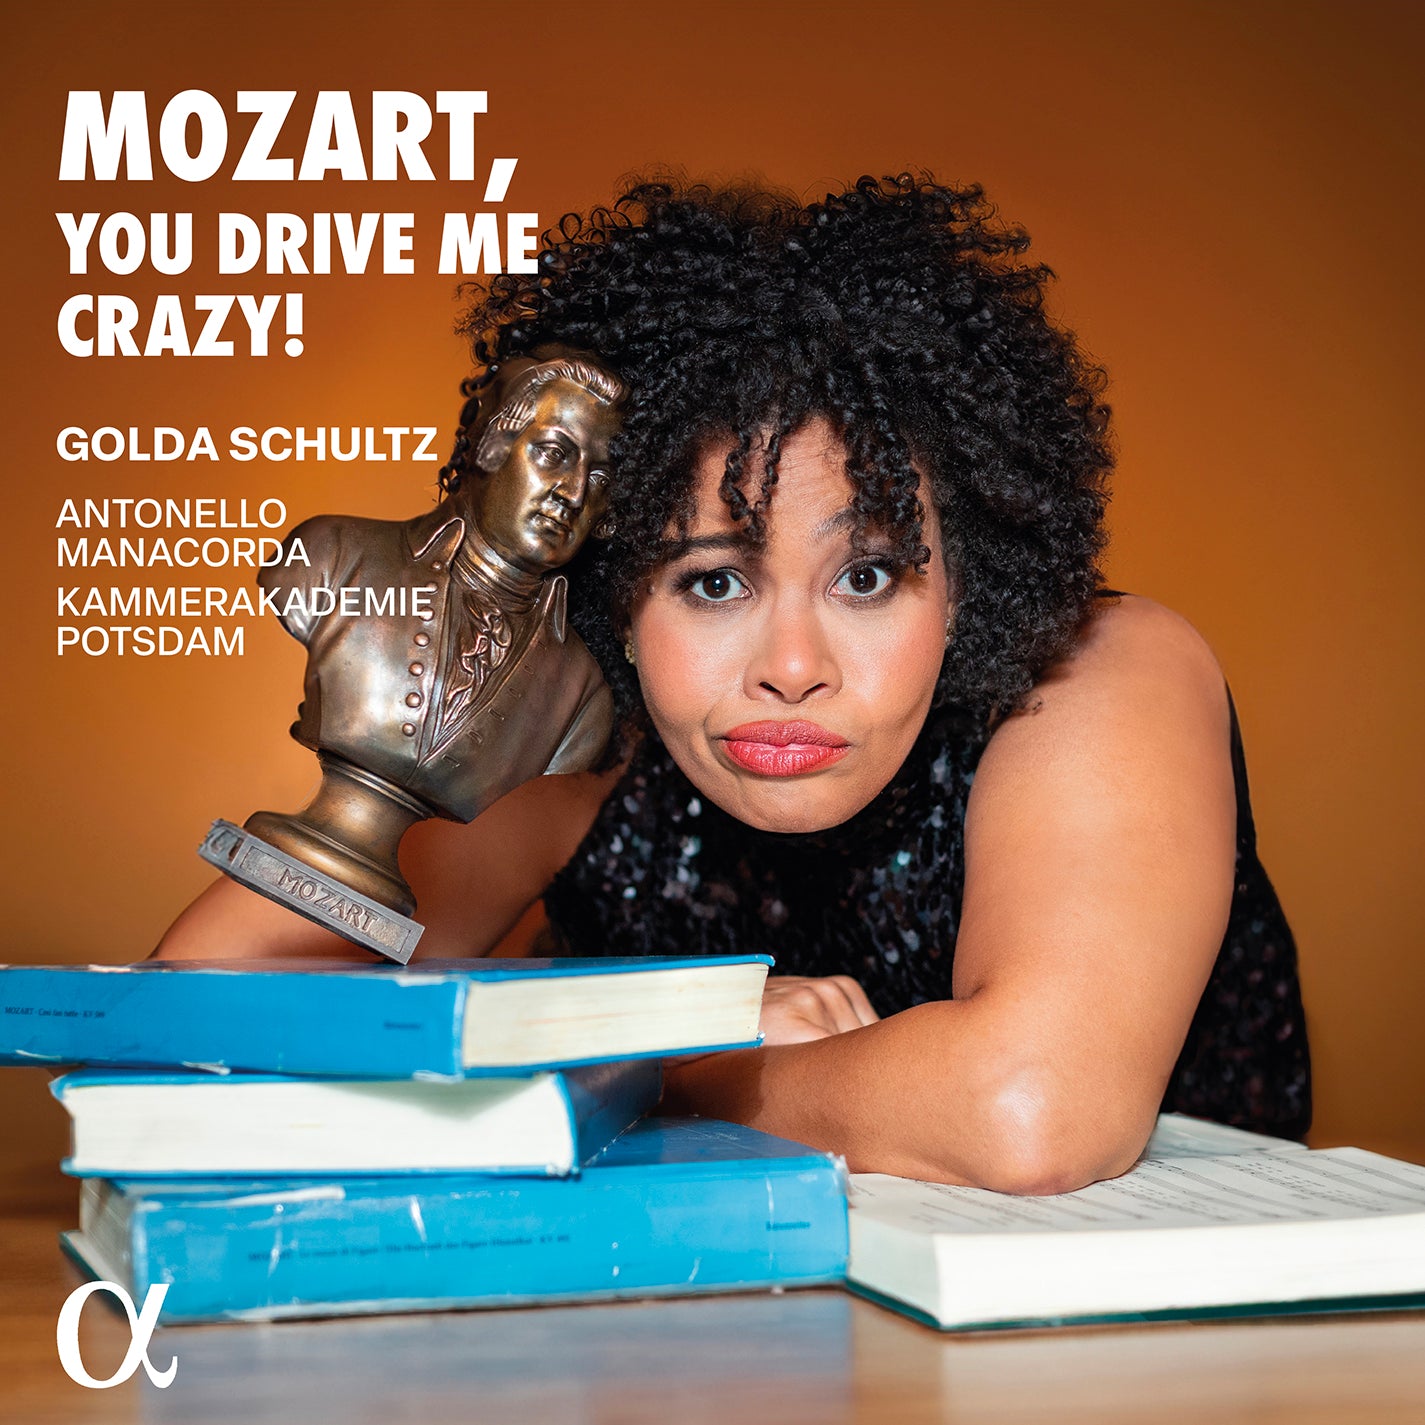 Mozart, You Drive Me Crazy! / Schultz, Manacorda, Potsdam Chamber Academy